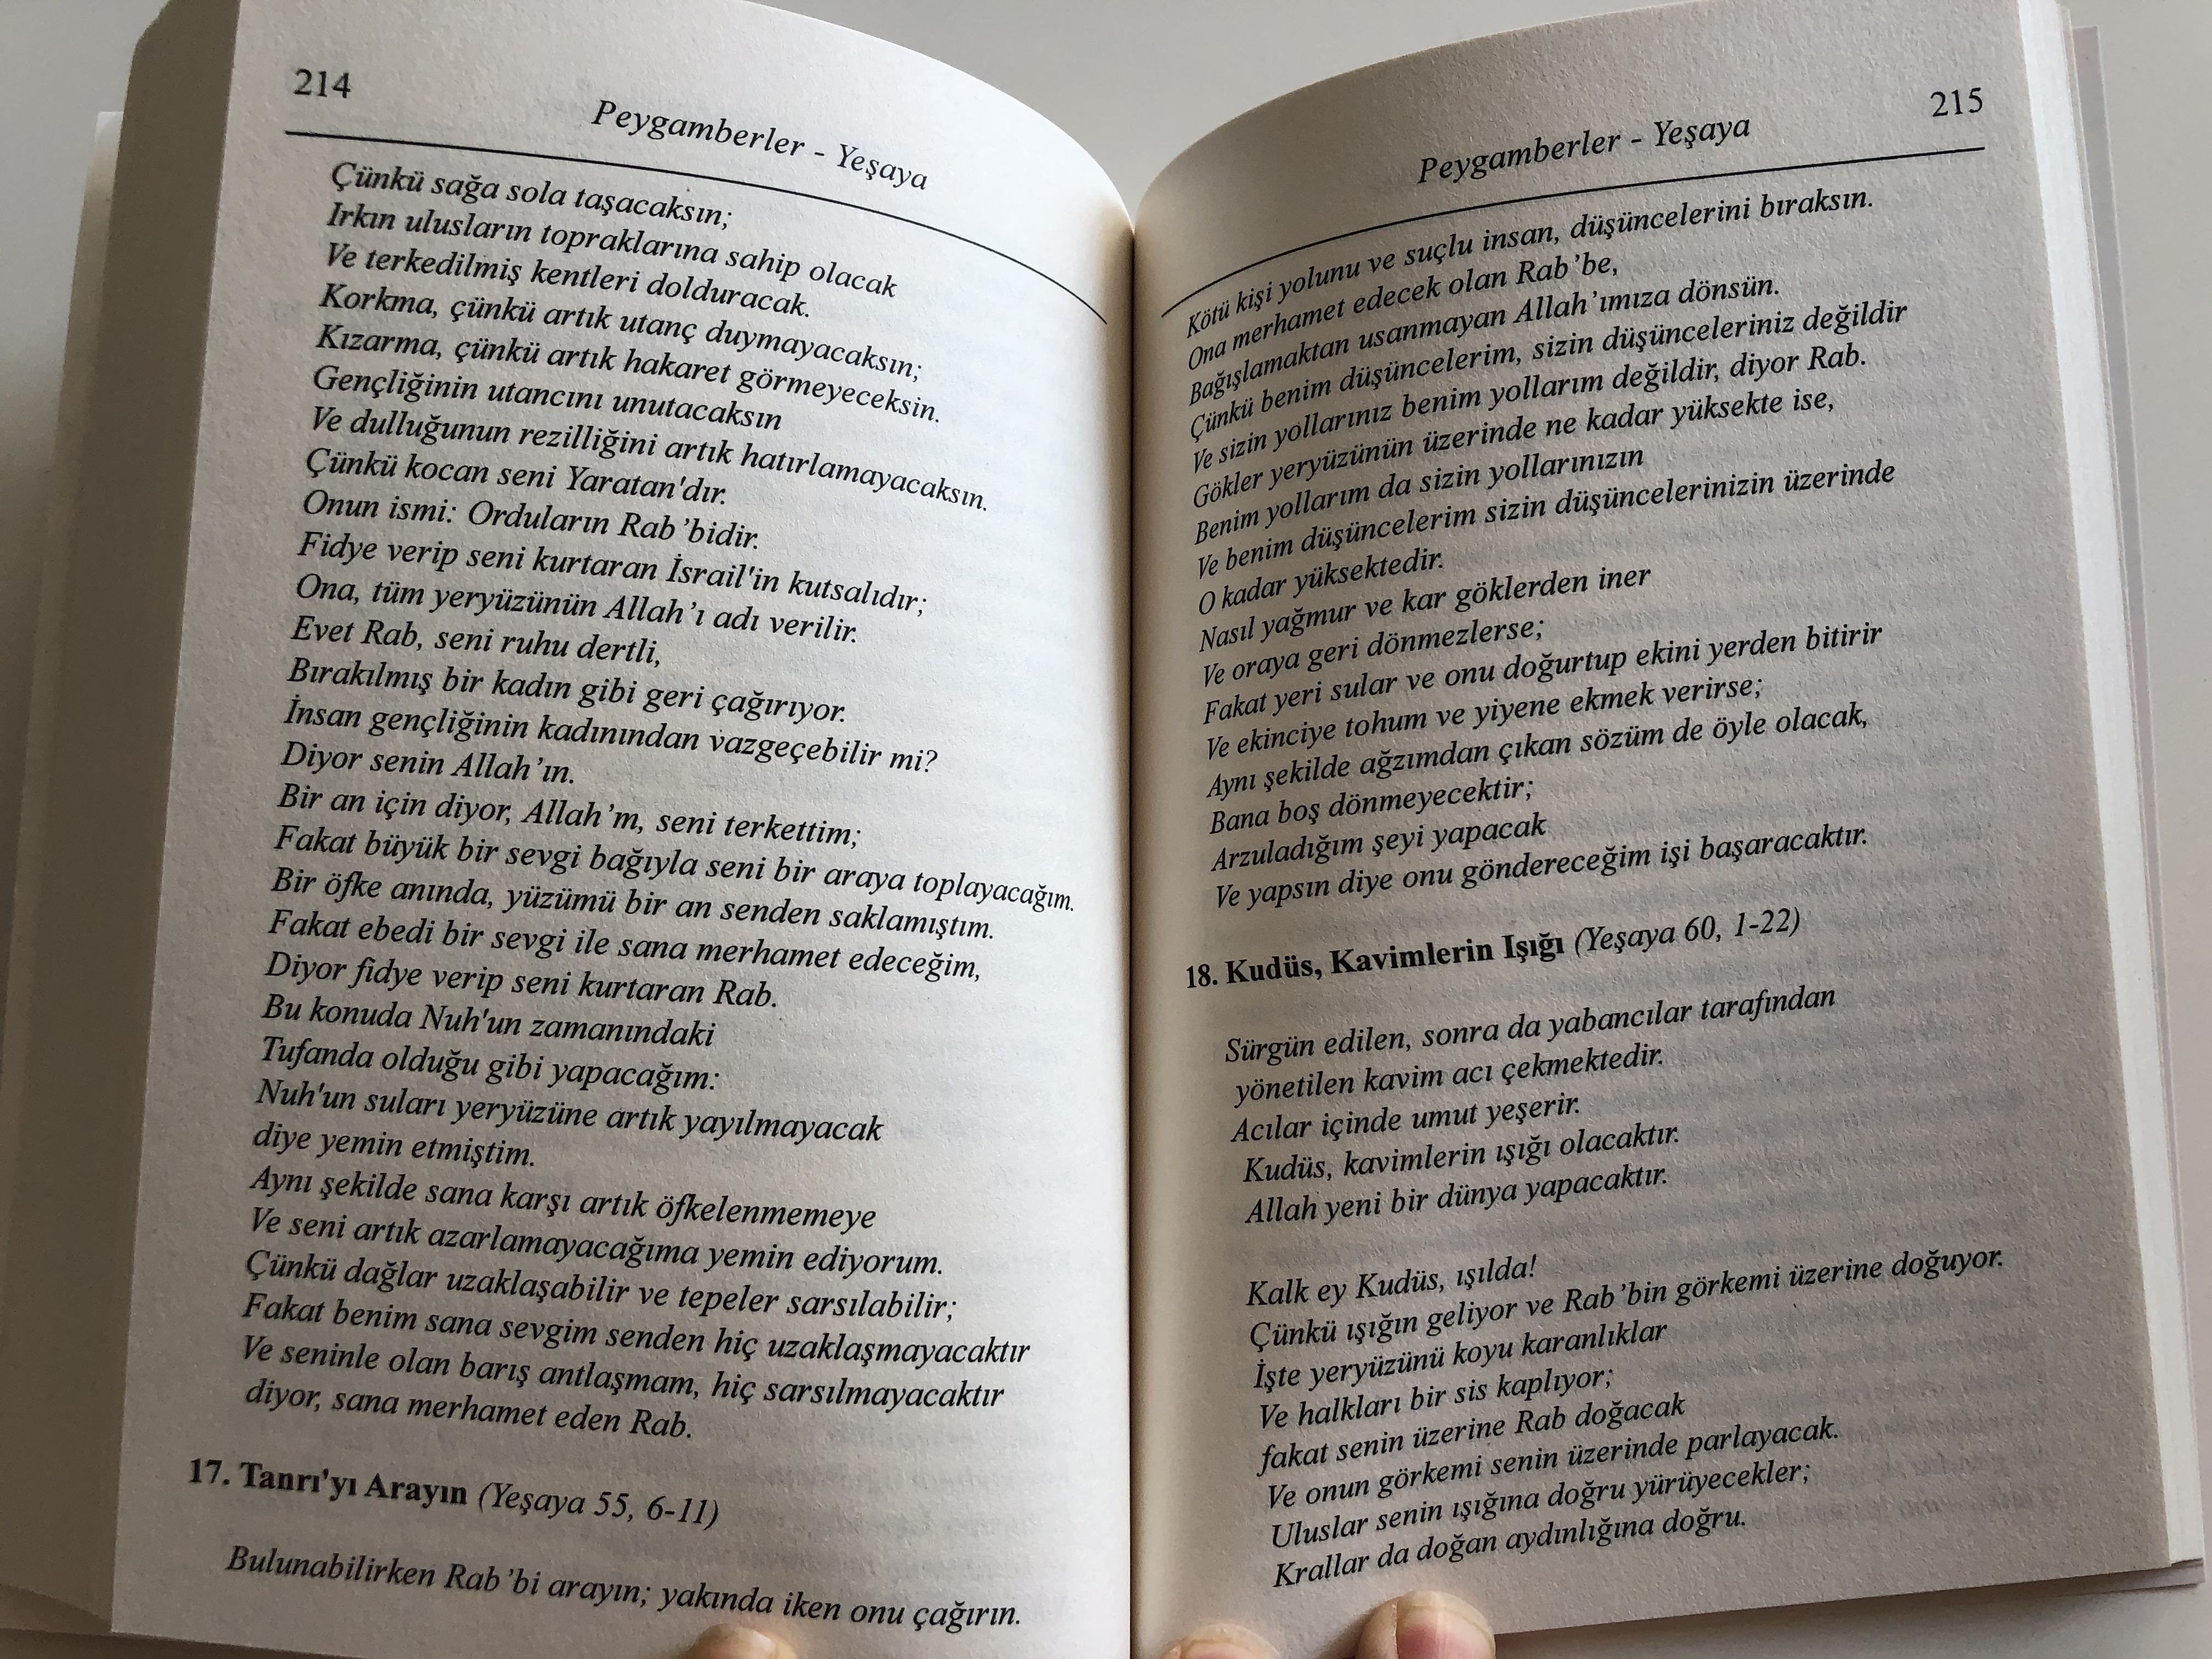 tevrat-turkish-bible-stories-translated-from-french-texts-by-dr.-jur-hakk-dem-rel-8-.jpg